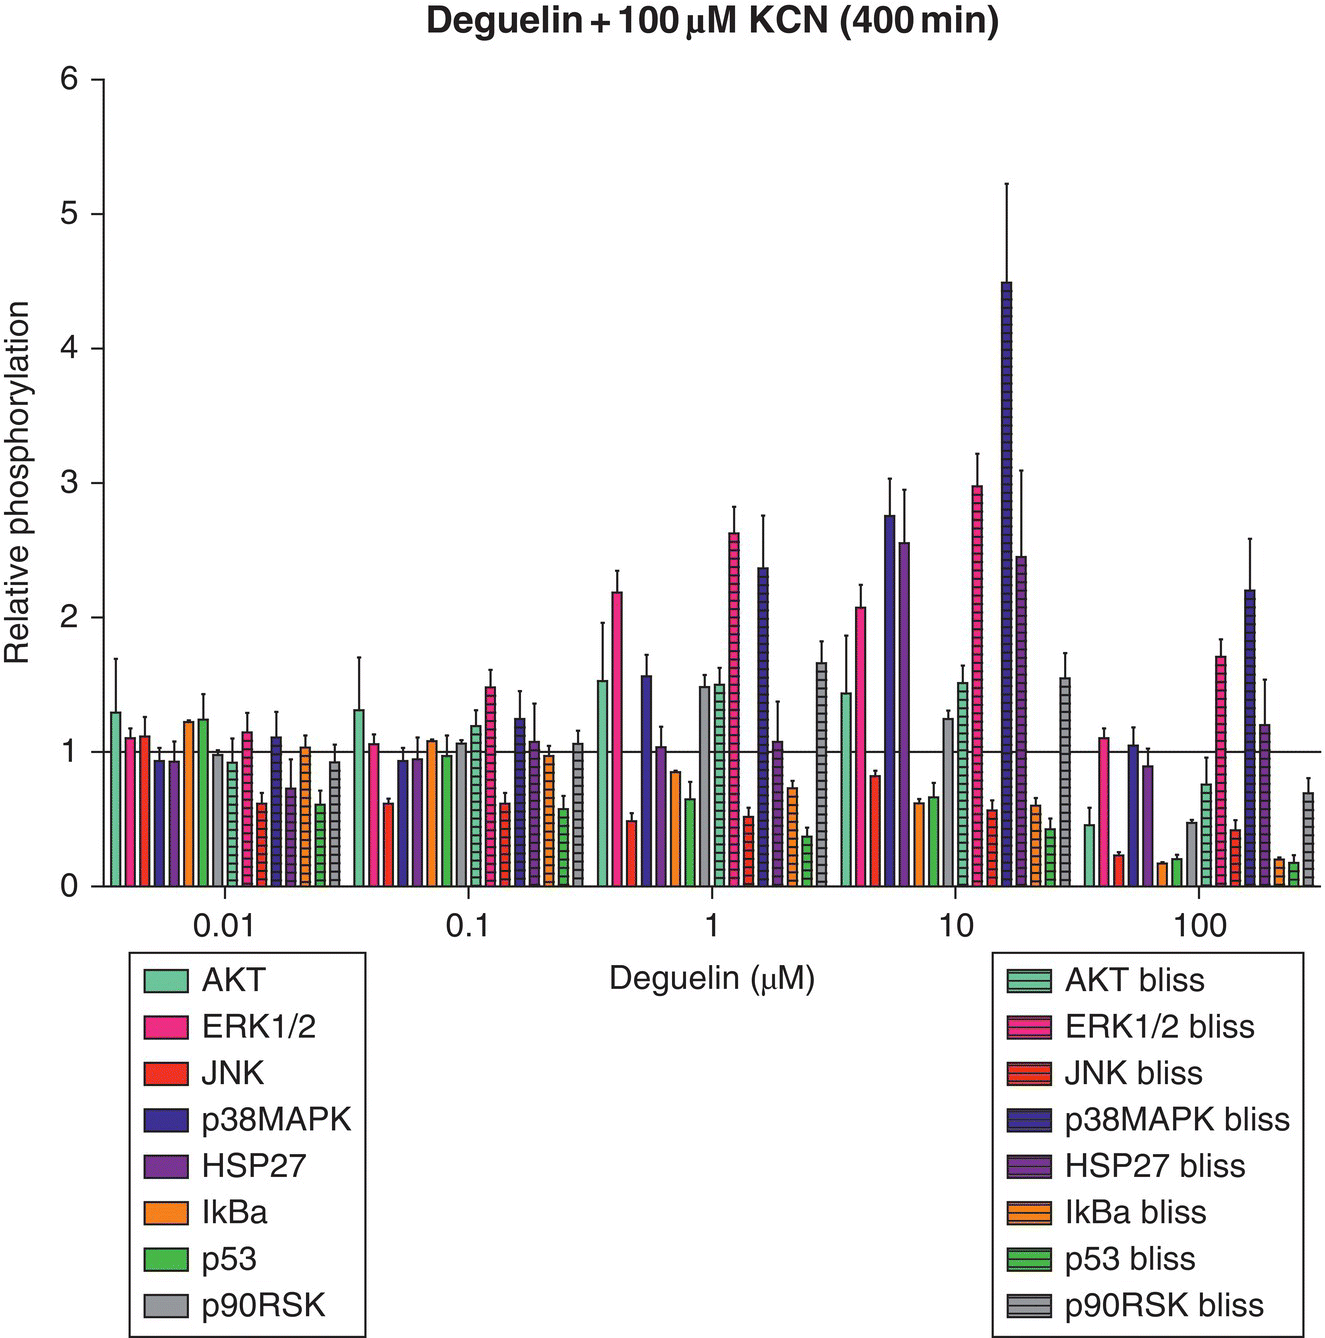 Graph for Deguelin+100 μM KCN (400 min) depicting a horizontal line at 1 and vertical bars representing for AKT, ERK1/2, JNK, p38MAPK, HSP27, IkBa, p53, p90RSK, AKT bliss, ERK1/2 bliss, JNK bliss, p38MAPK bliss, etc.